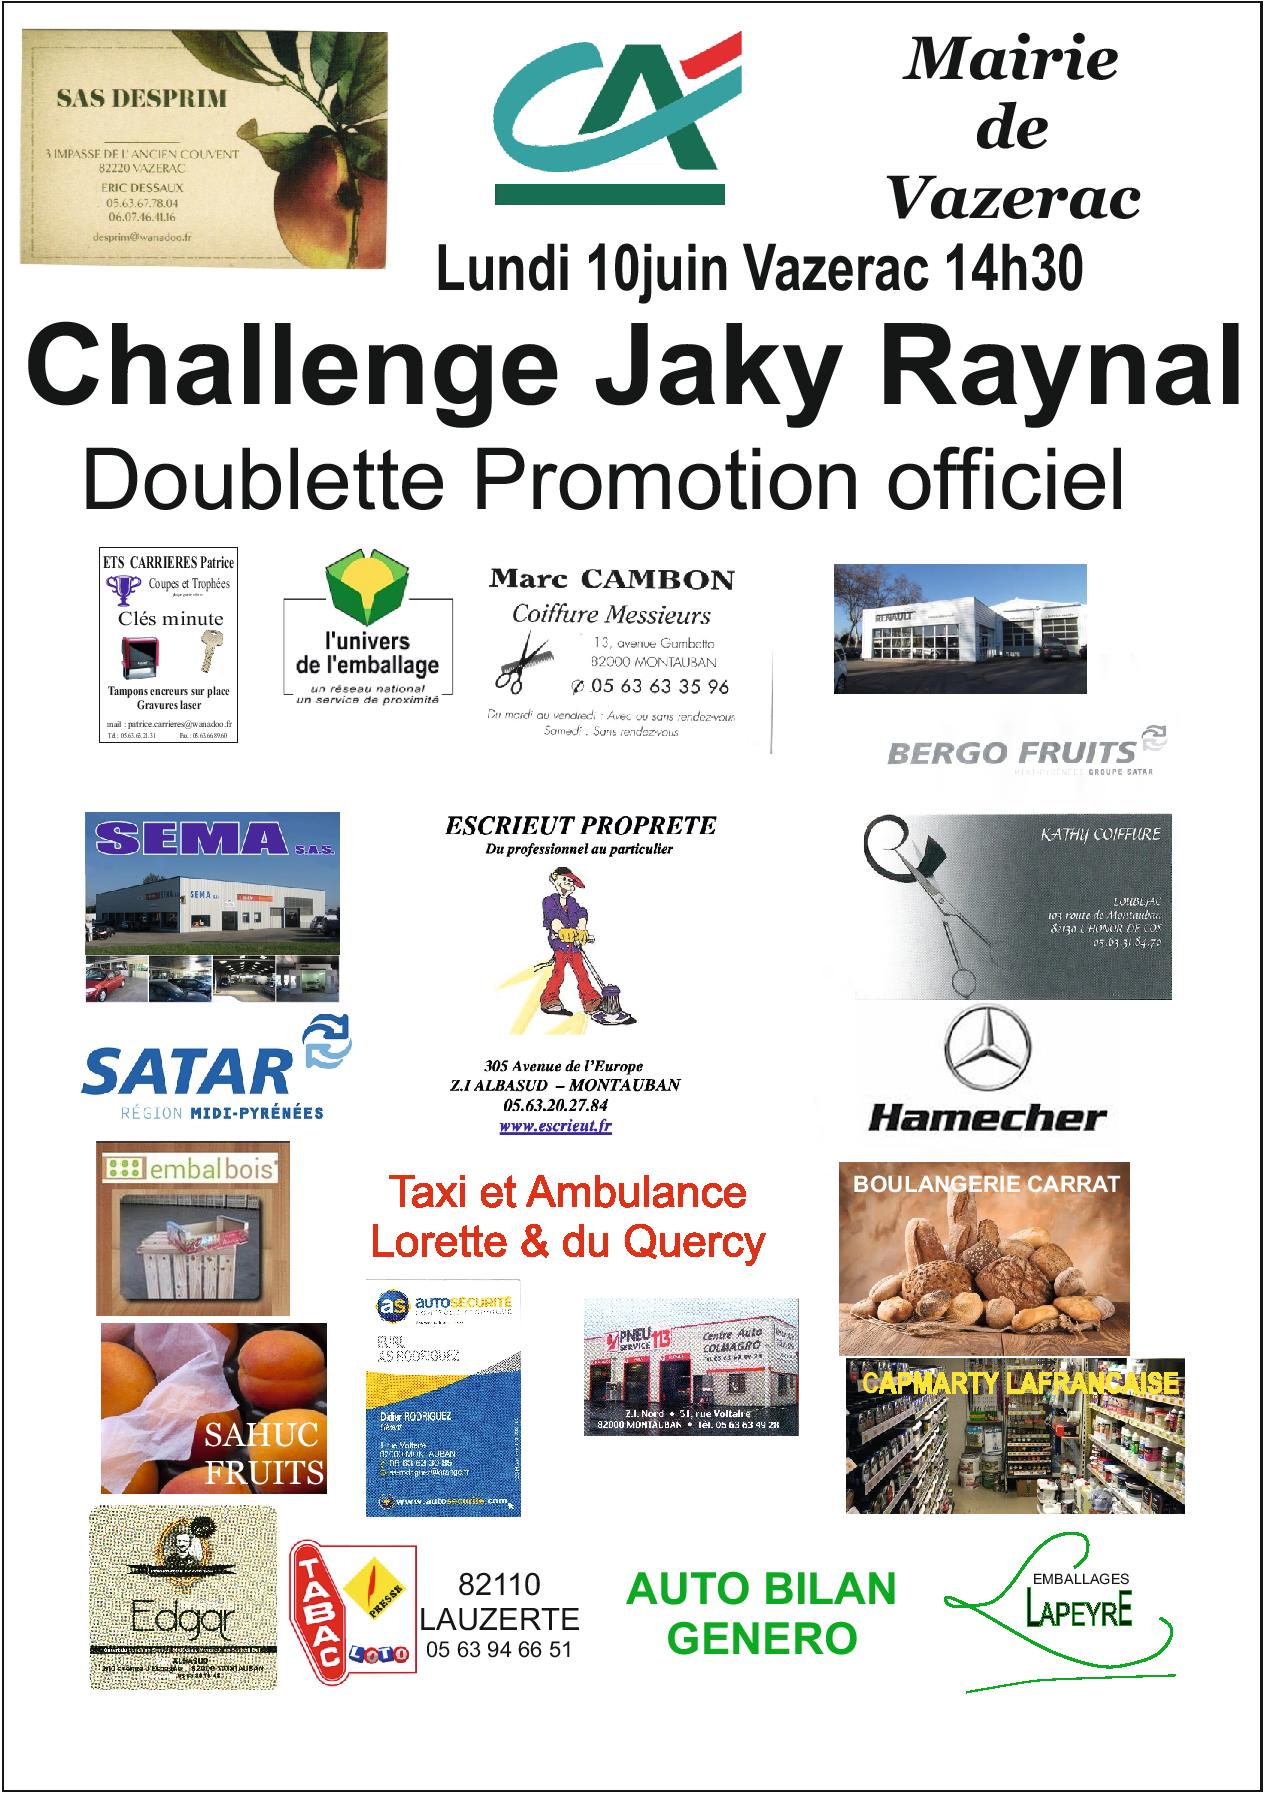 Challenge Jaky Raynal.